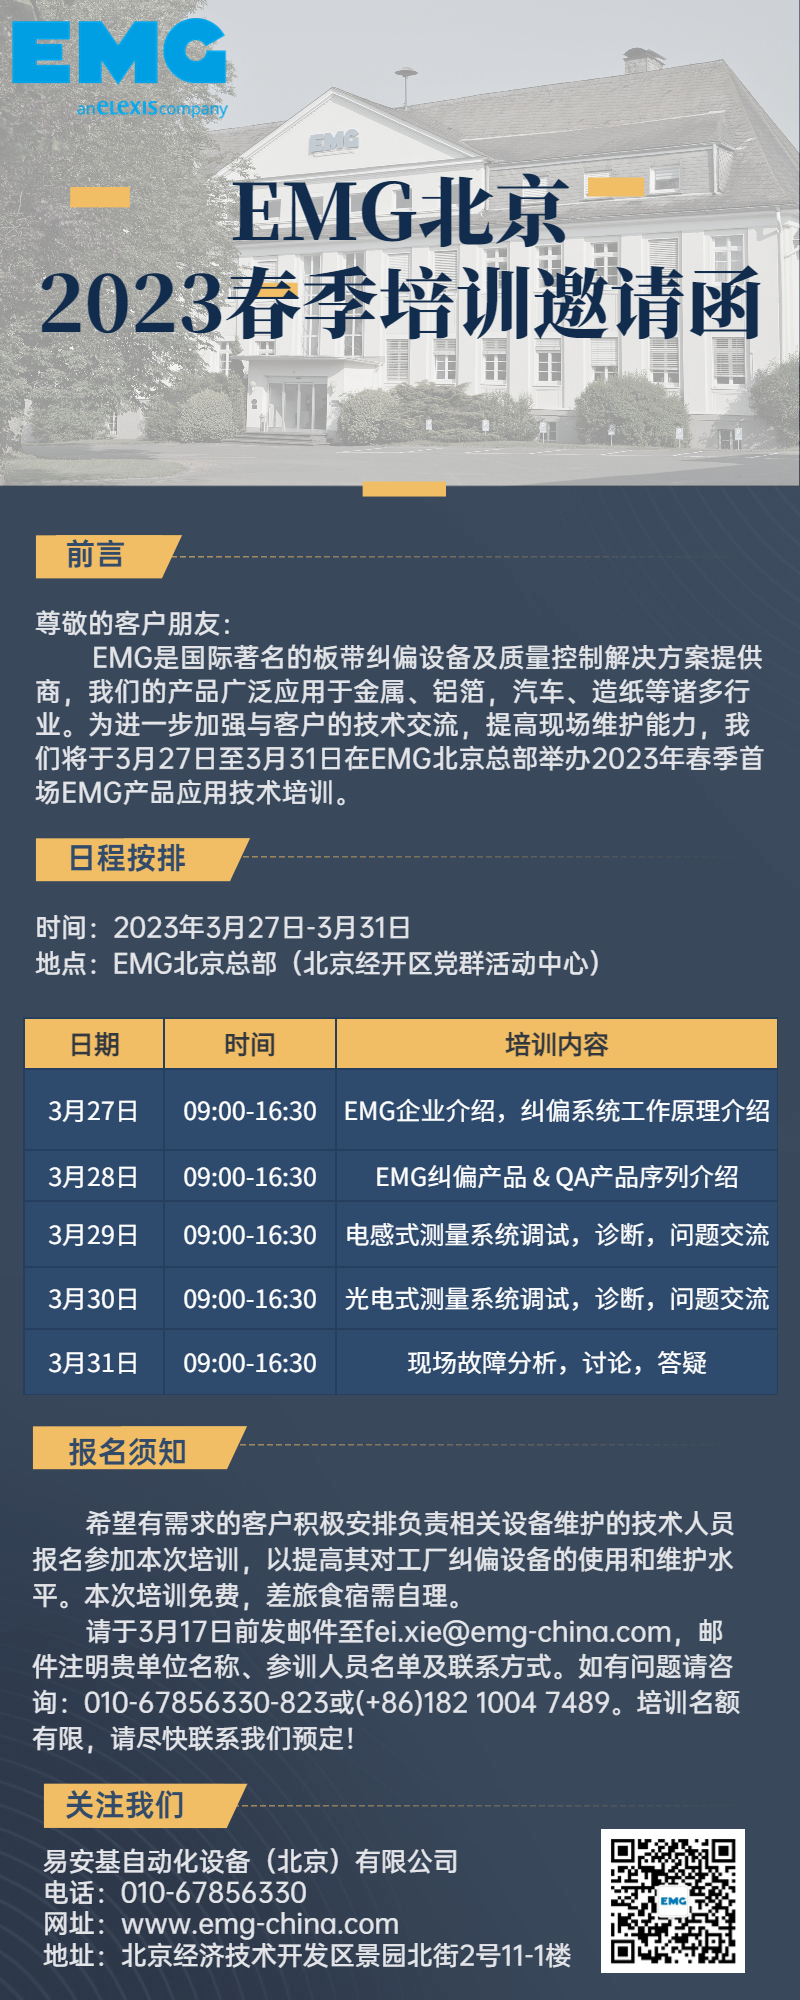 EMG北京2023春季首场技术培训通知-20230309.jpg